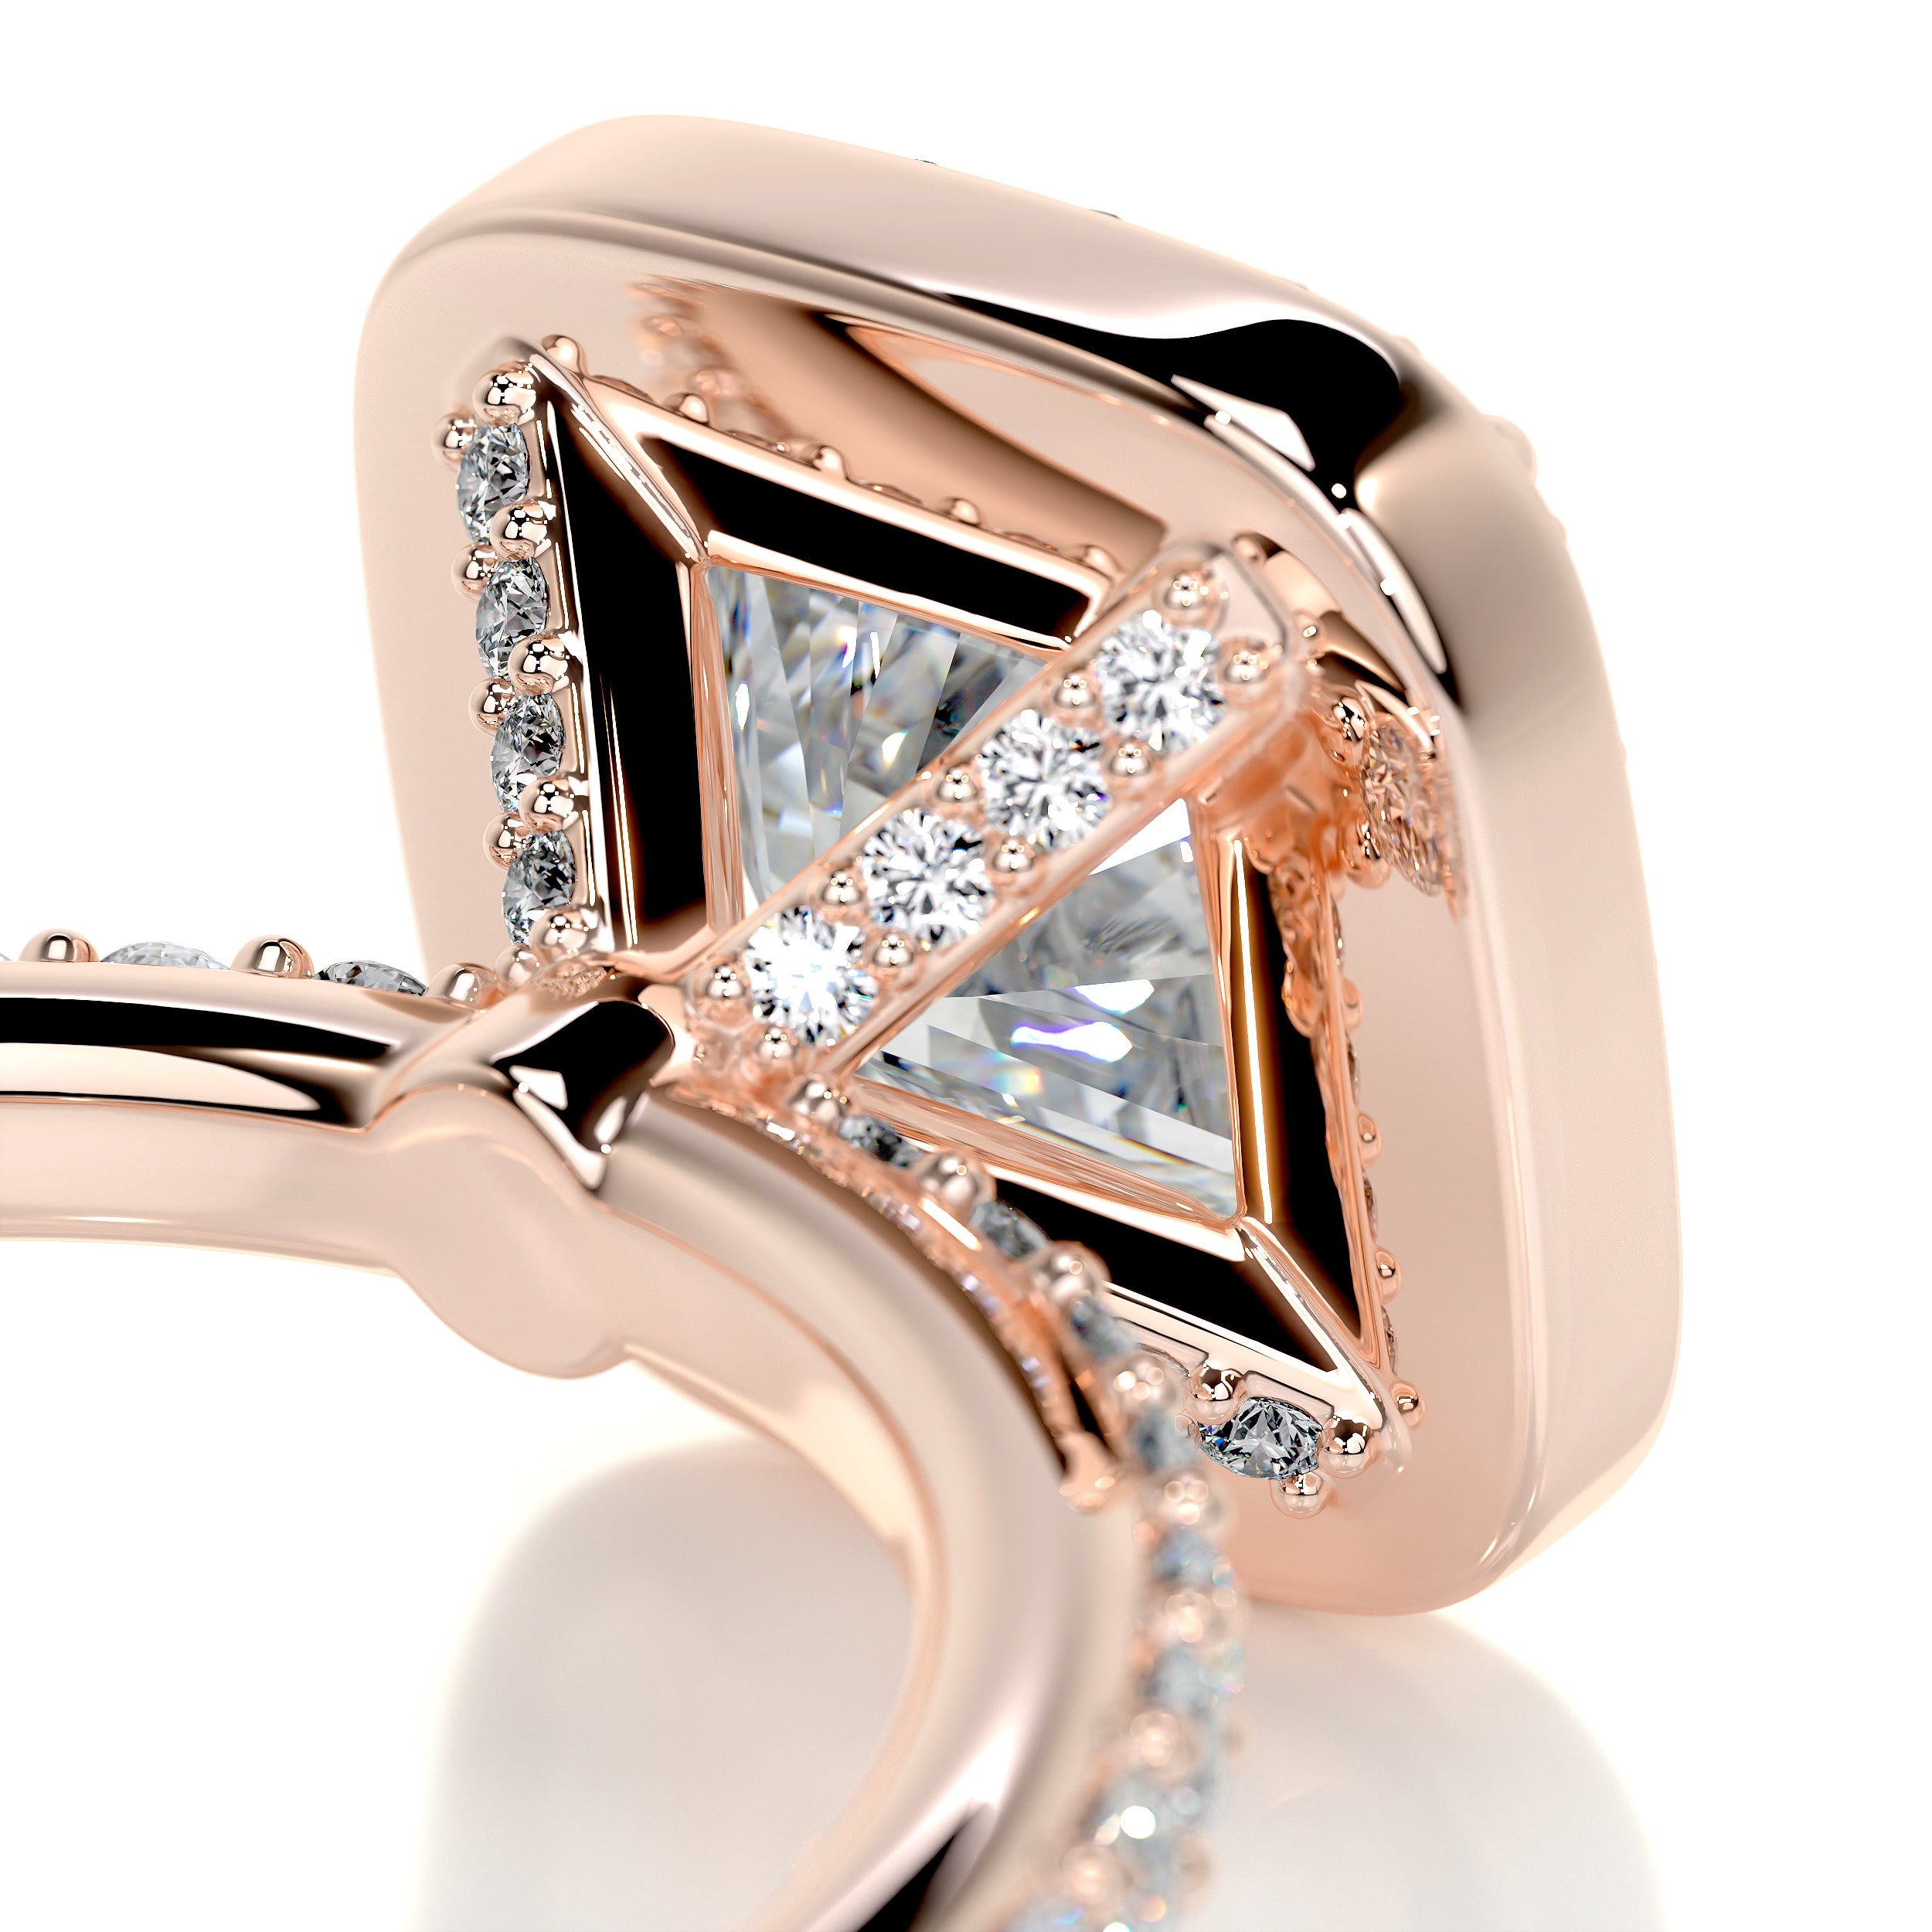 Paula Diamond Engagement Ring -14K Rose Gold